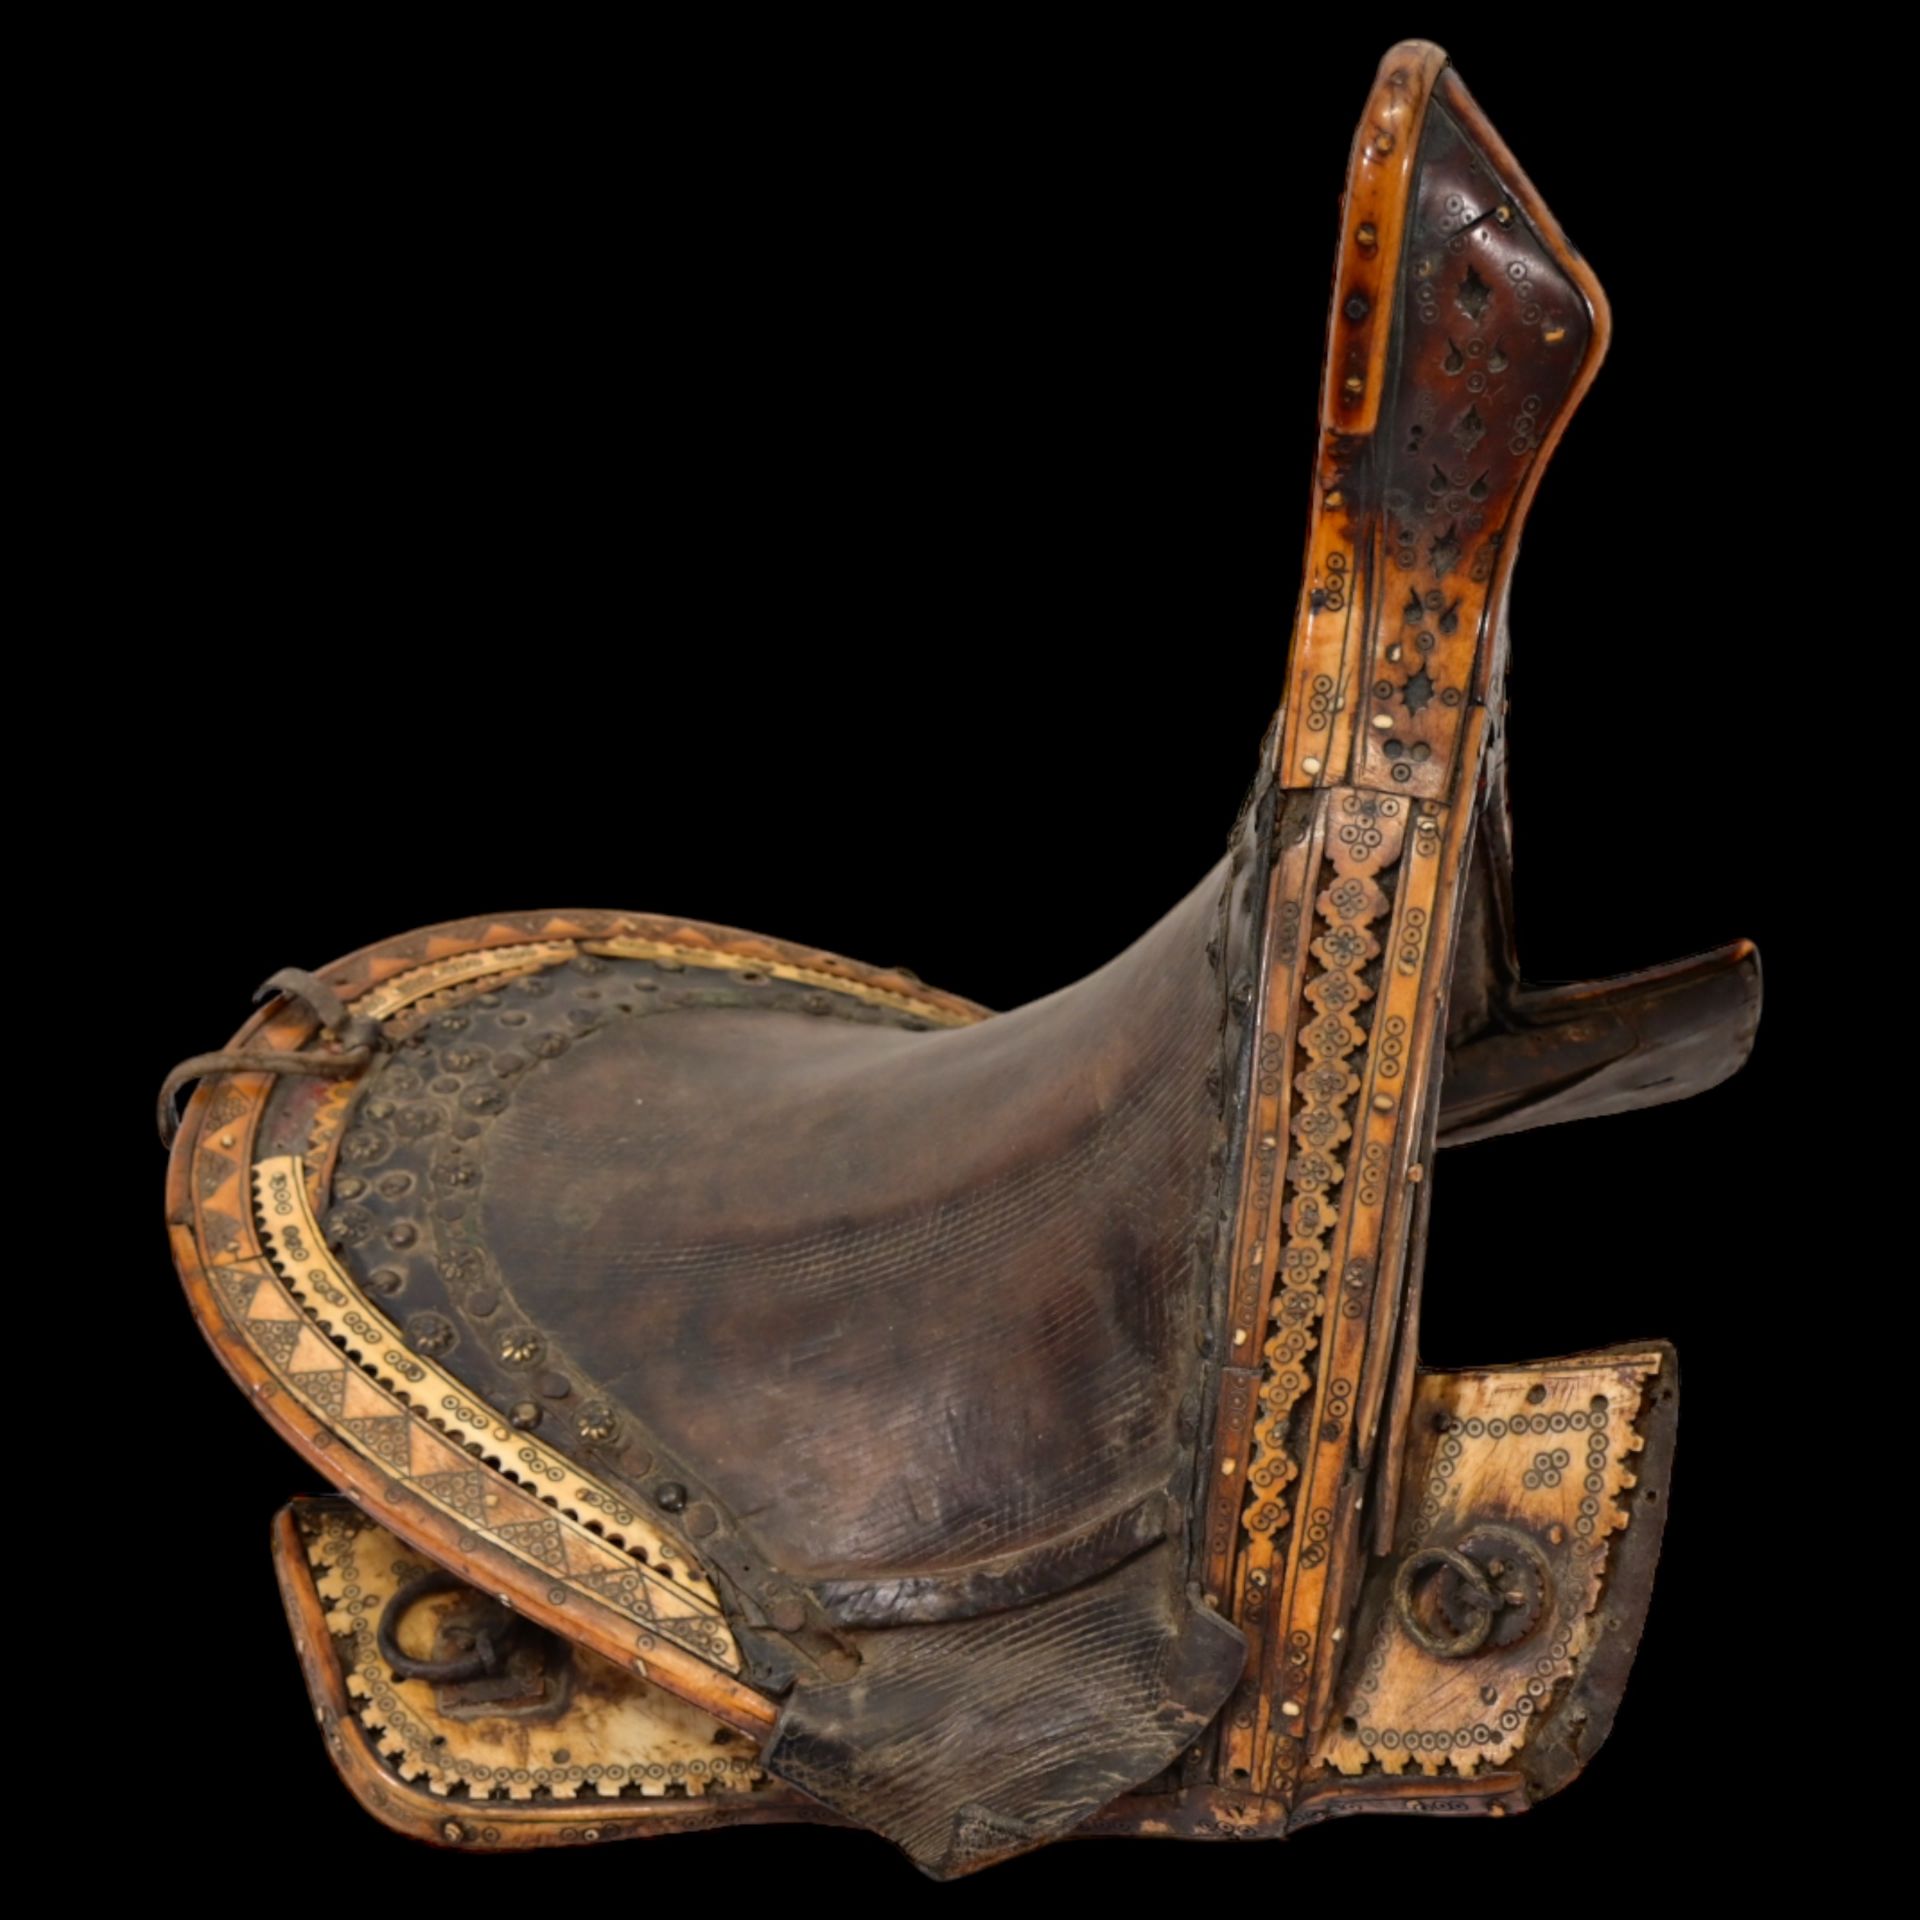 Rare antique Islamic Ottoman, Persian or Central Asia saddle for horseback, 18th century. - Image 3 of 12